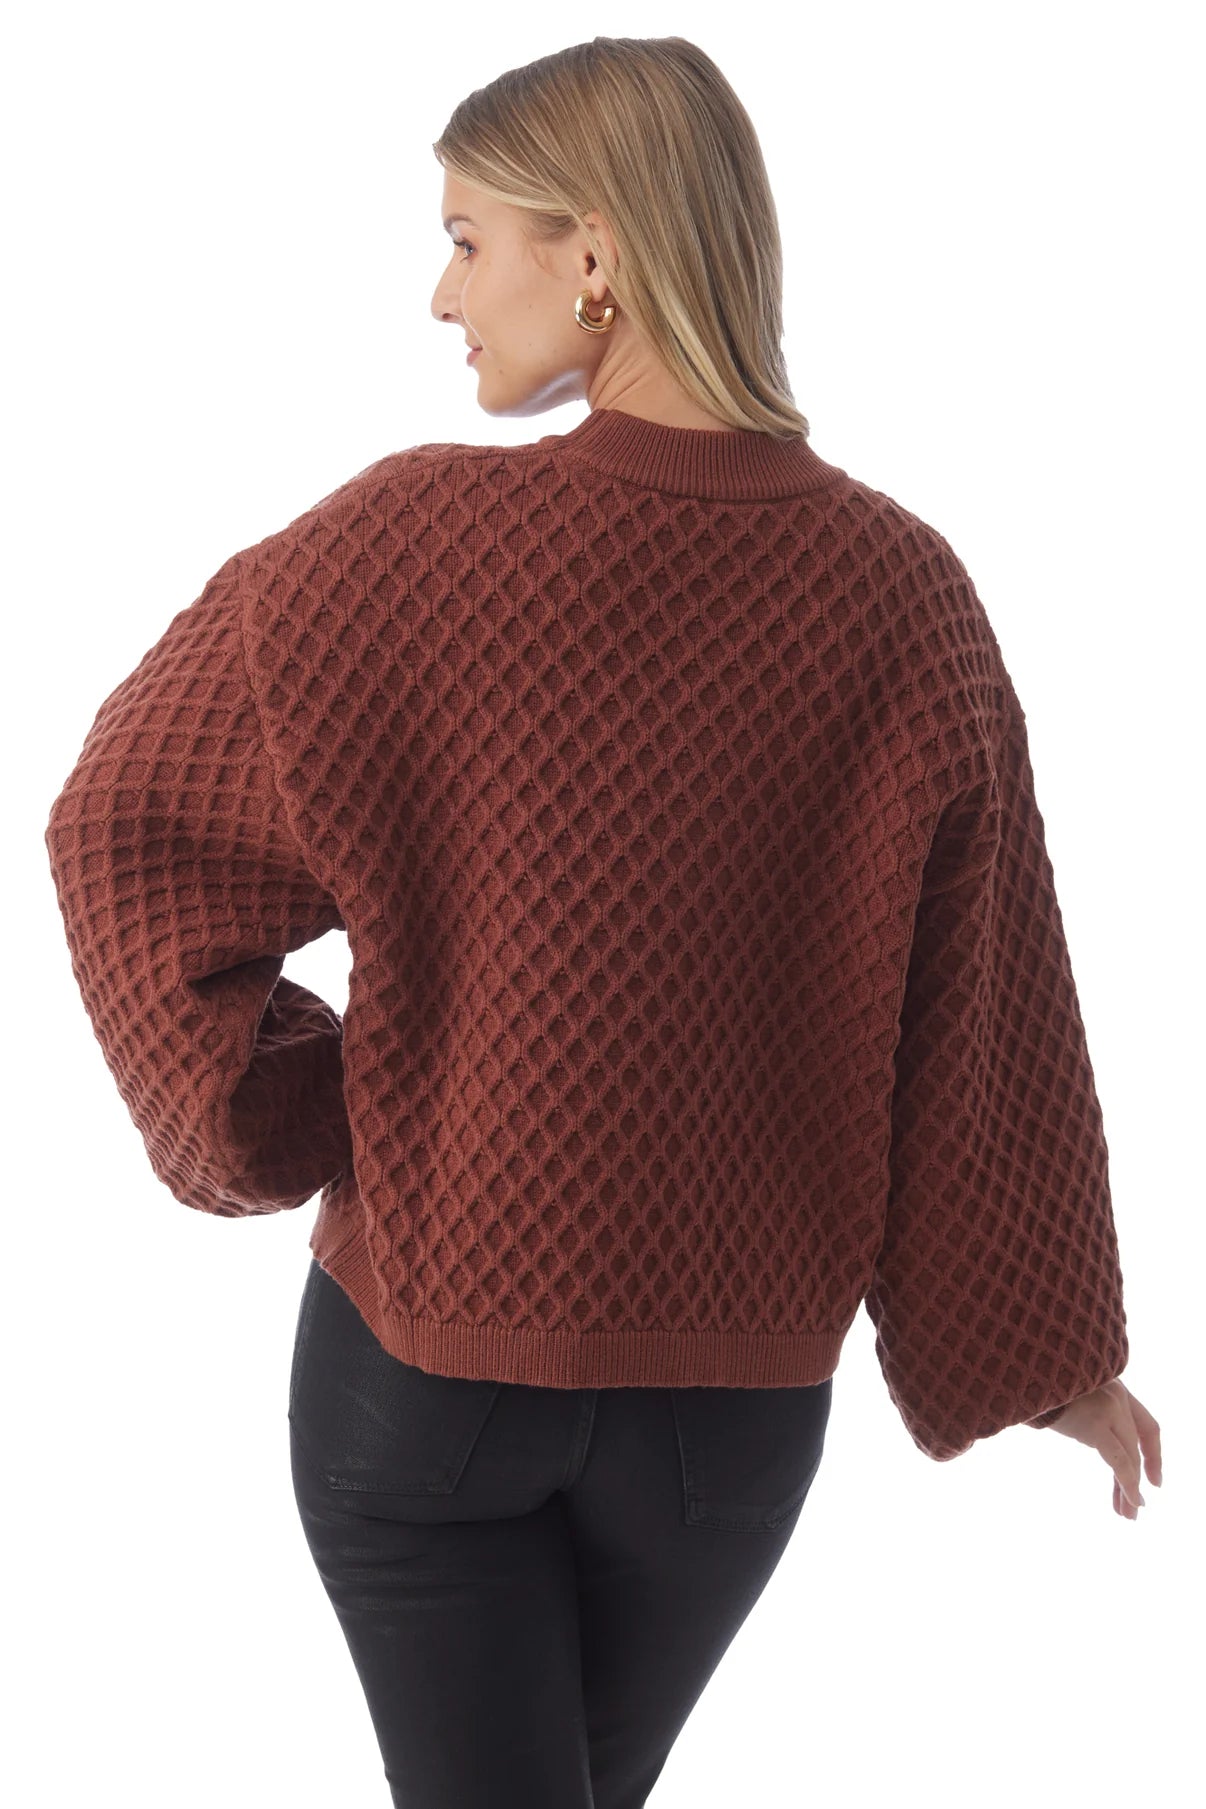 Crosby Miller Sweater - Sienna